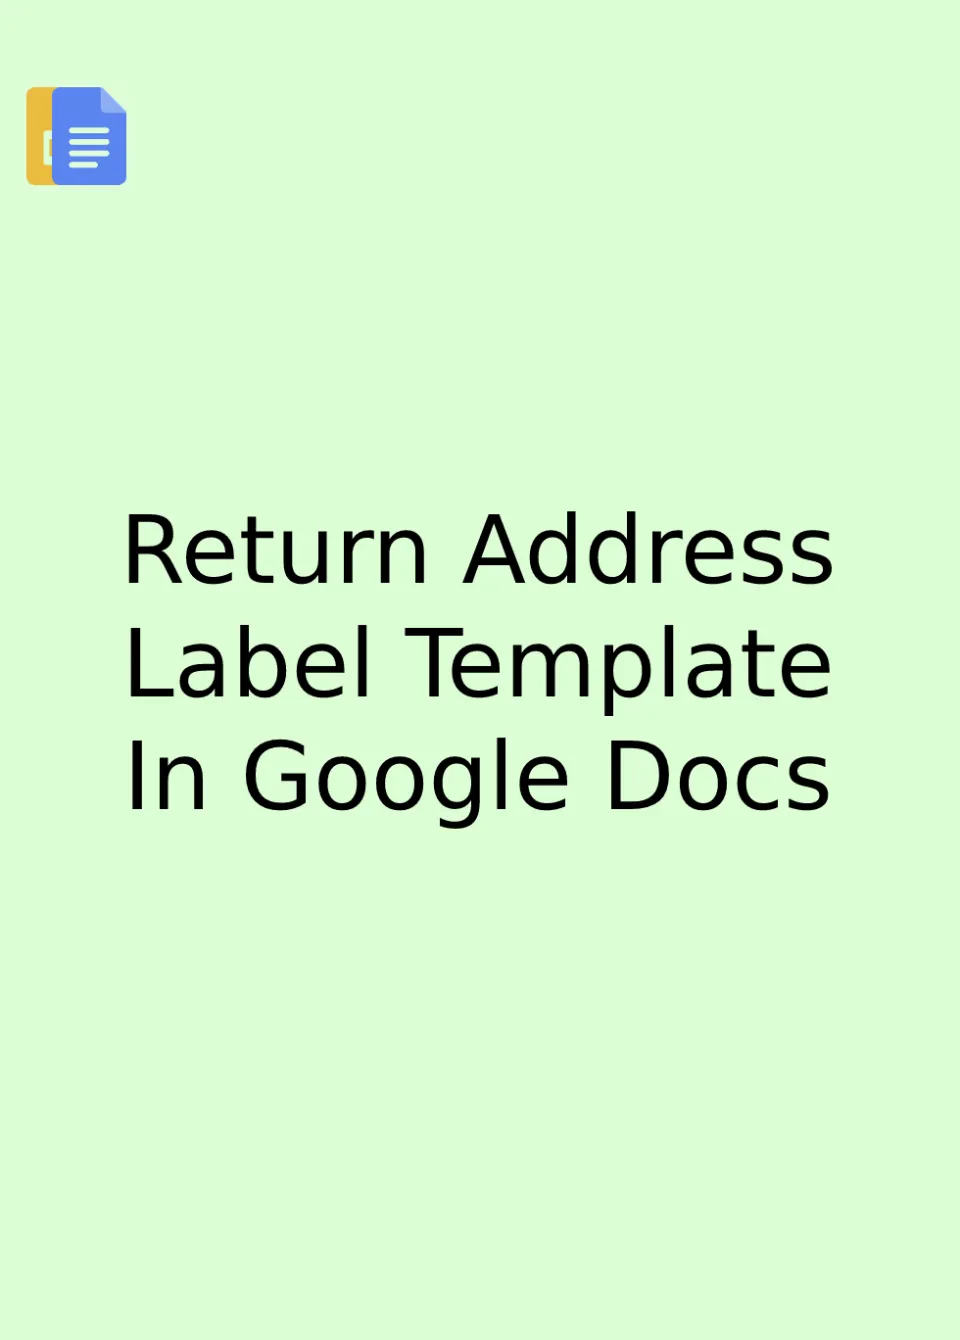 Return Address Label Template Google Docs